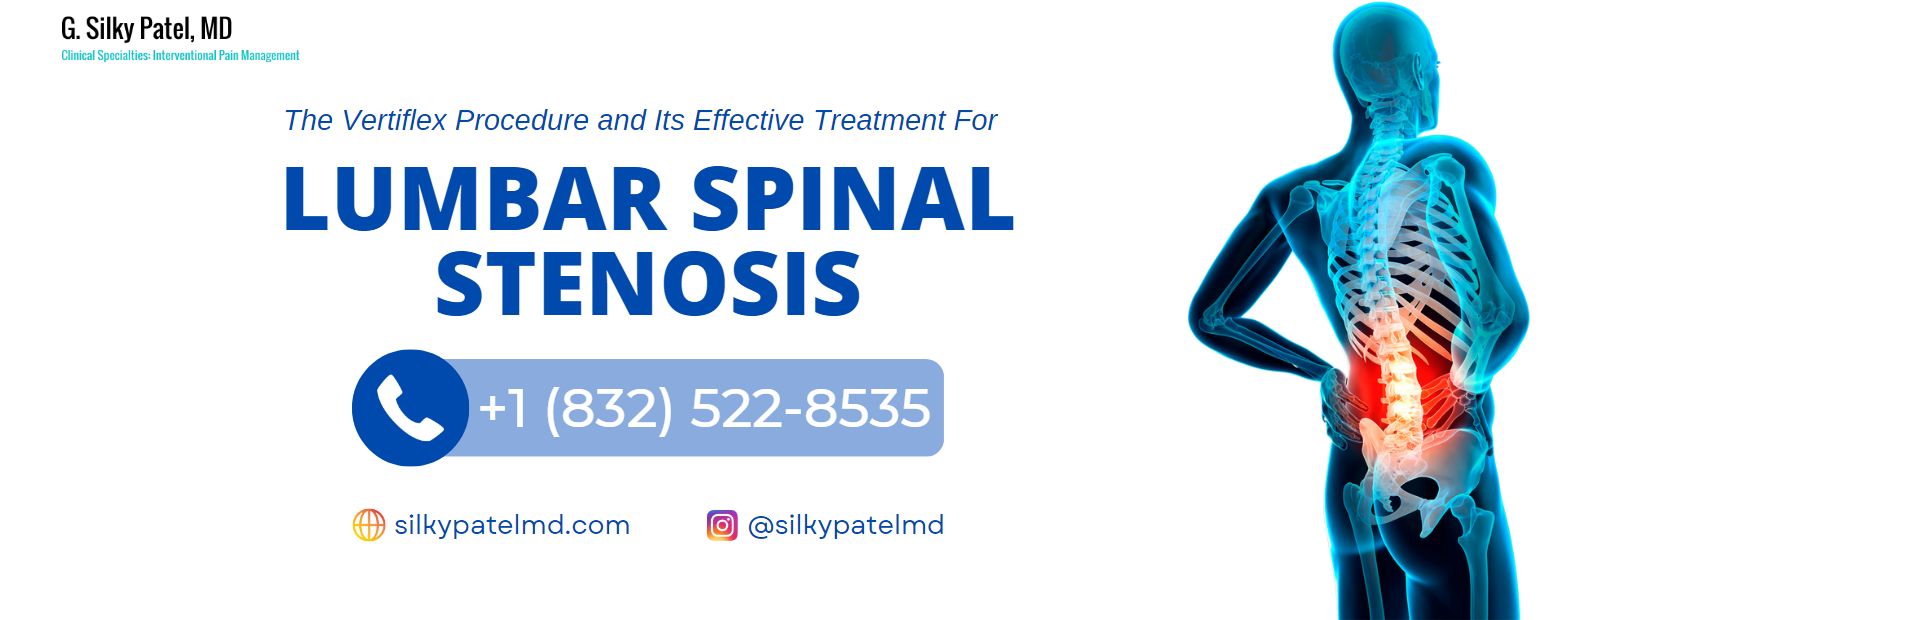 Vertiflex Procedure | Lumbar Spinal Stenosis - Silky Patel MD